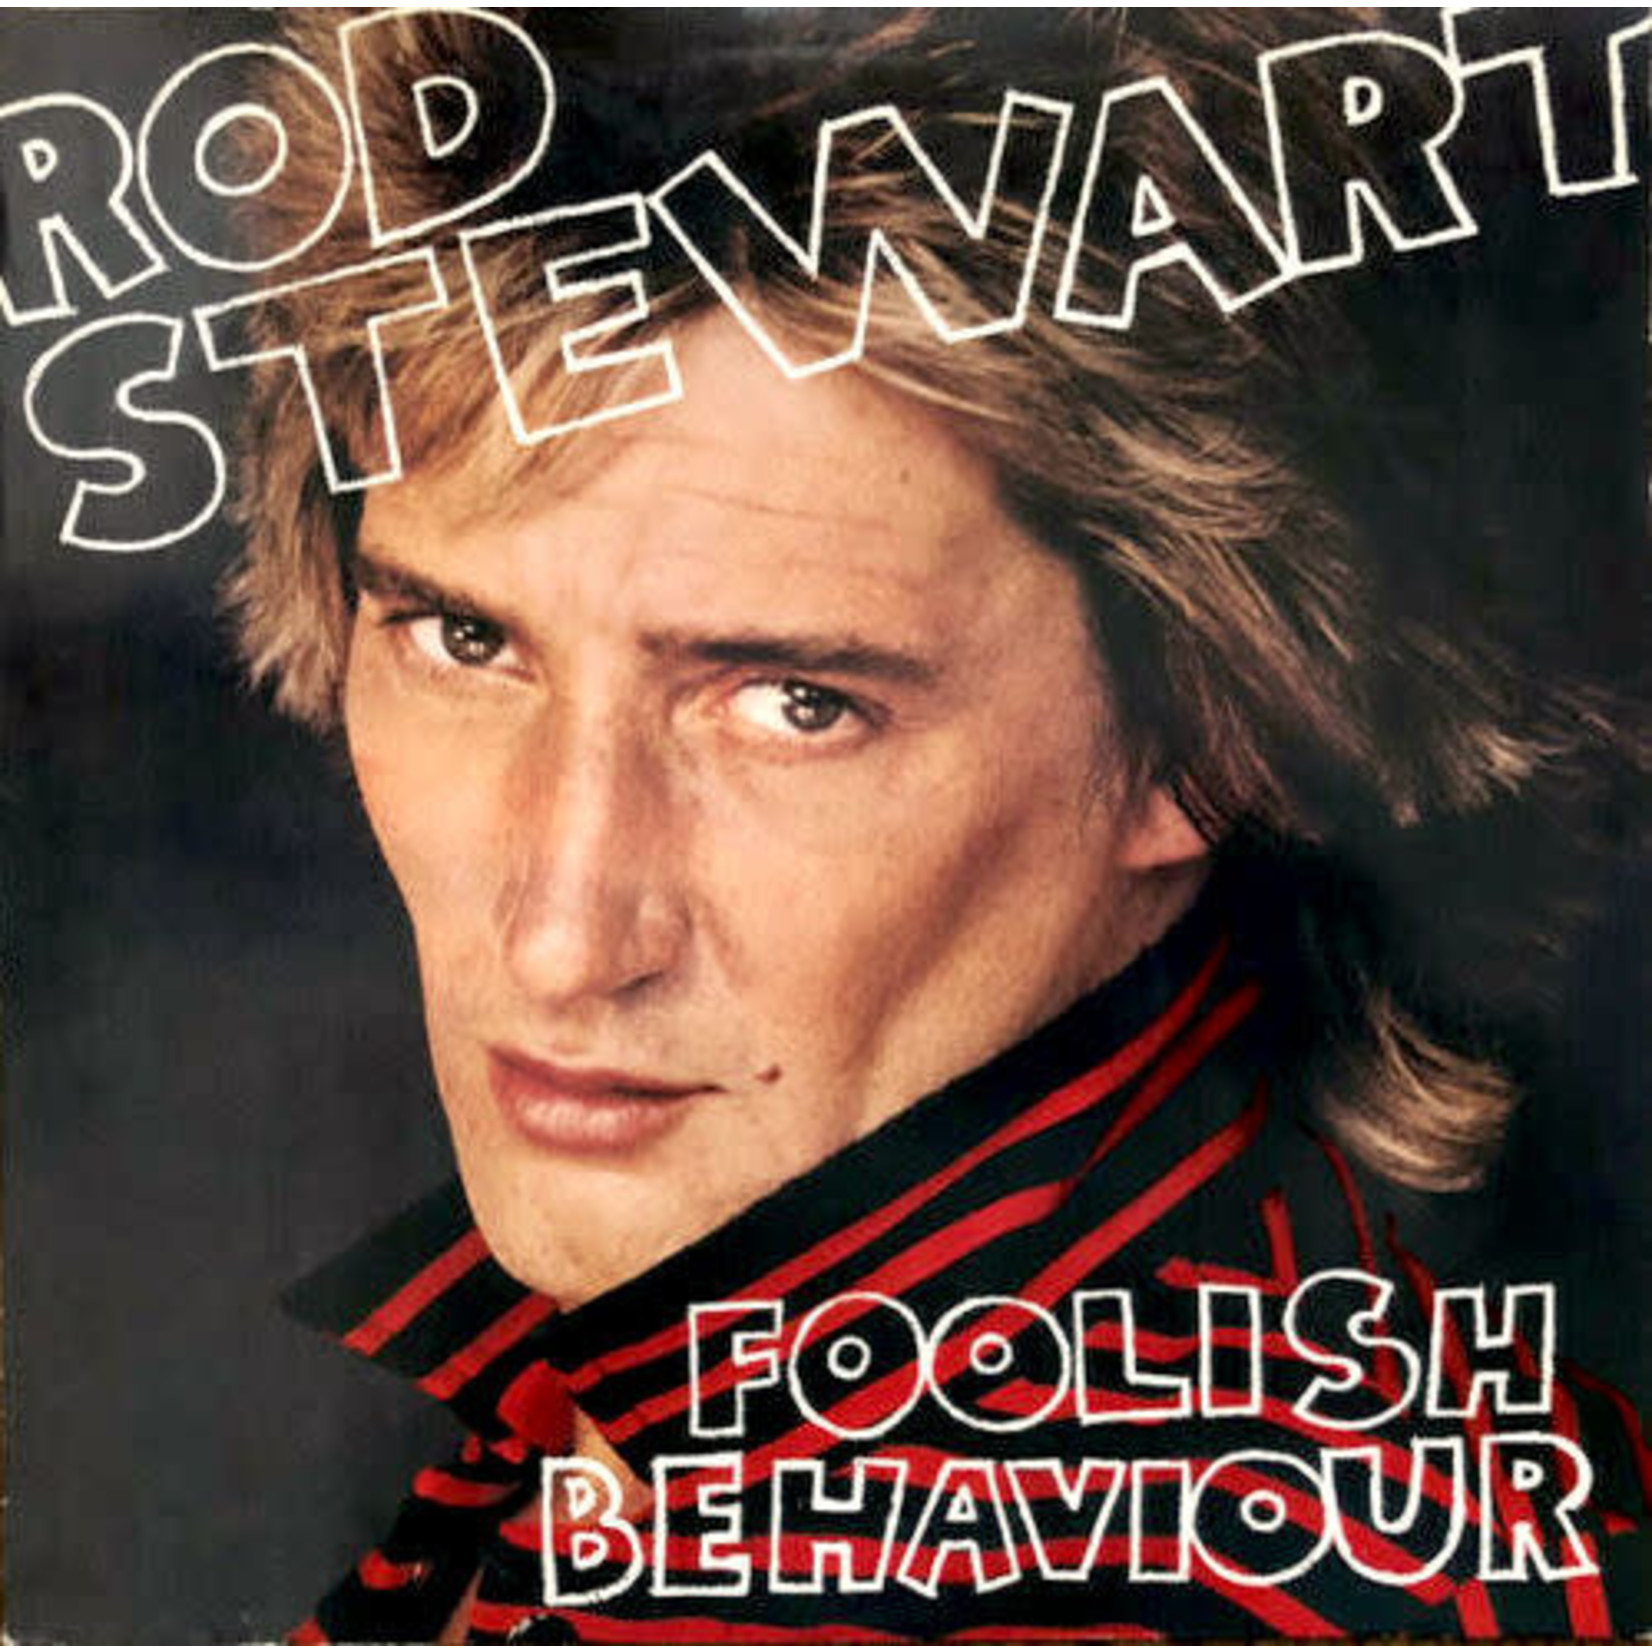 [Vintage] Rod Stewart - Foolish Behaviour